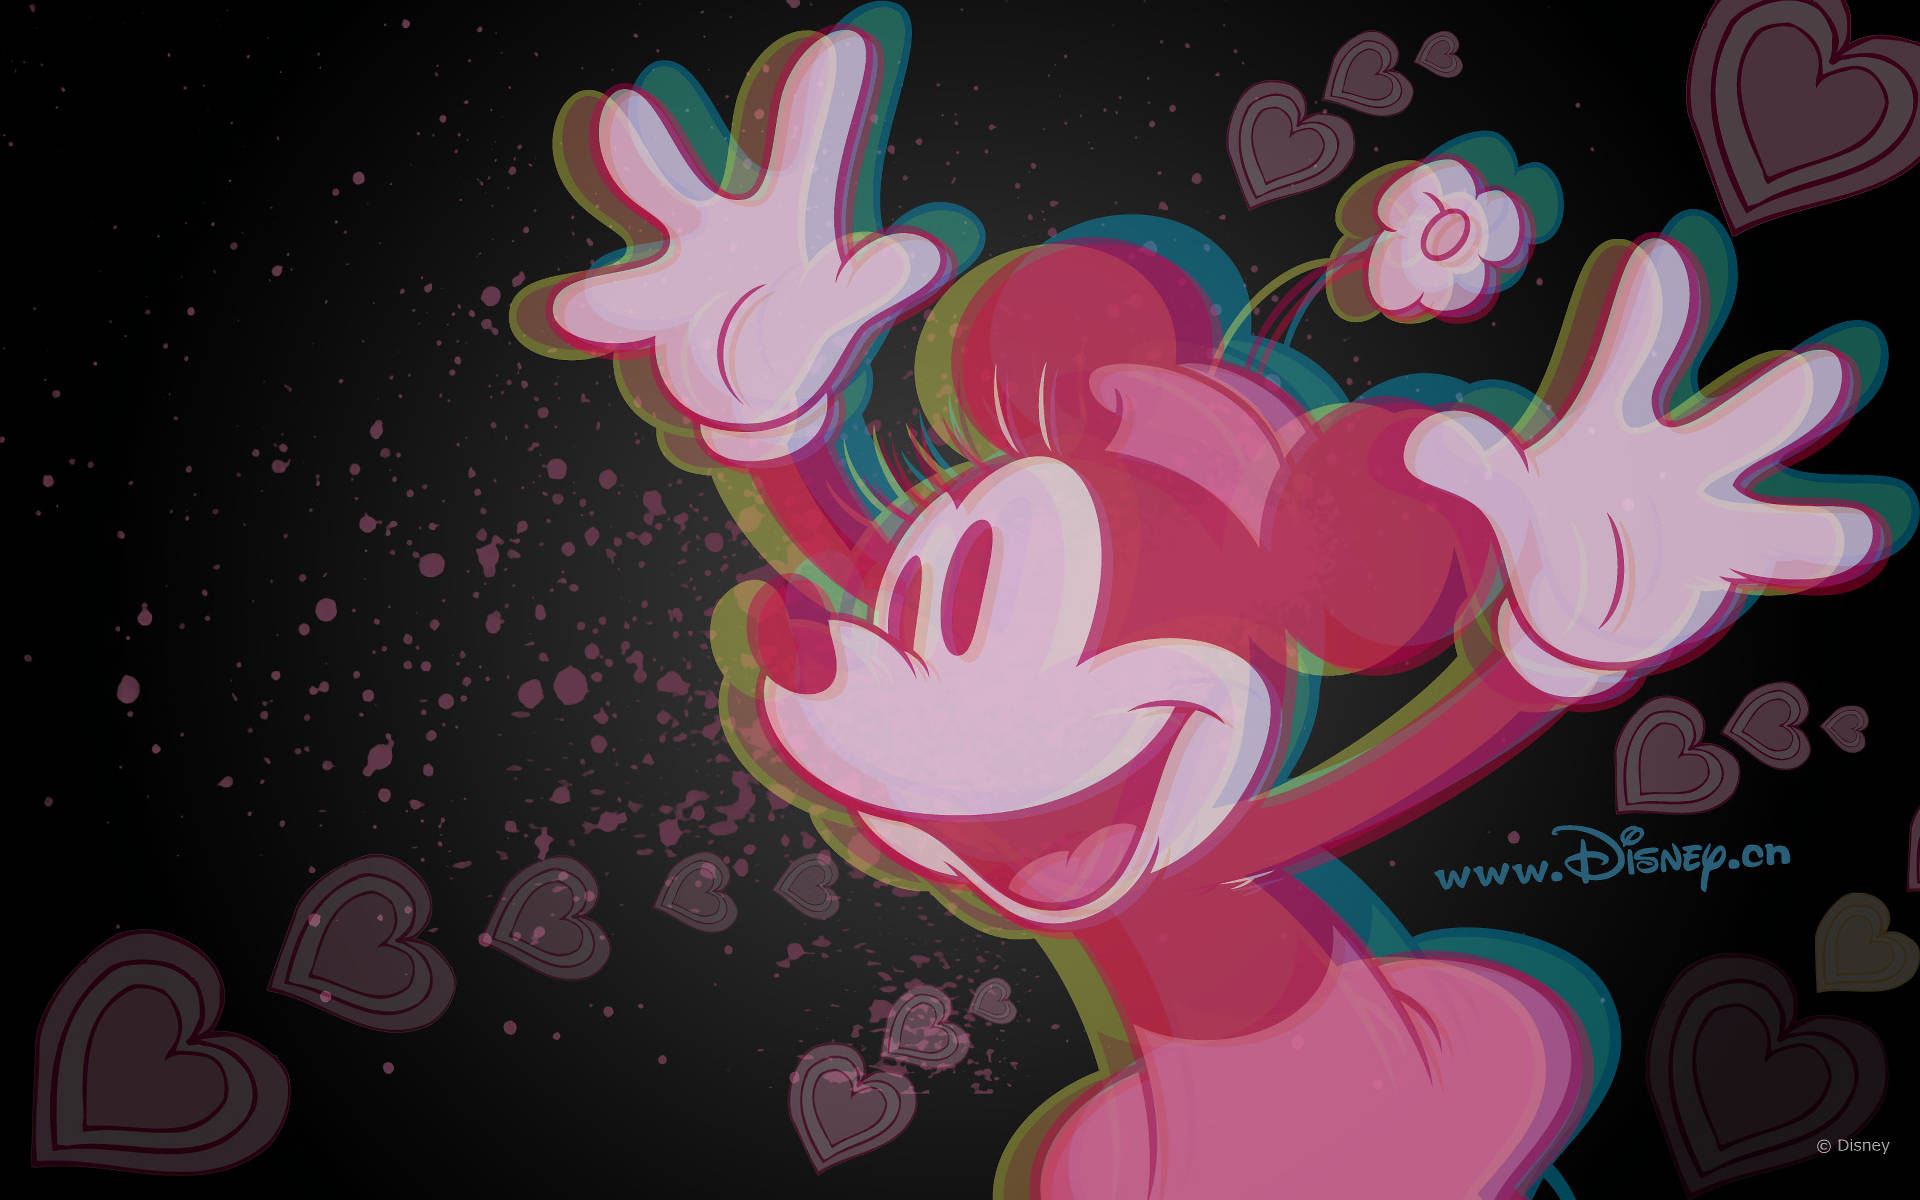 Disney Trippy Minnie Mouse wallpaper